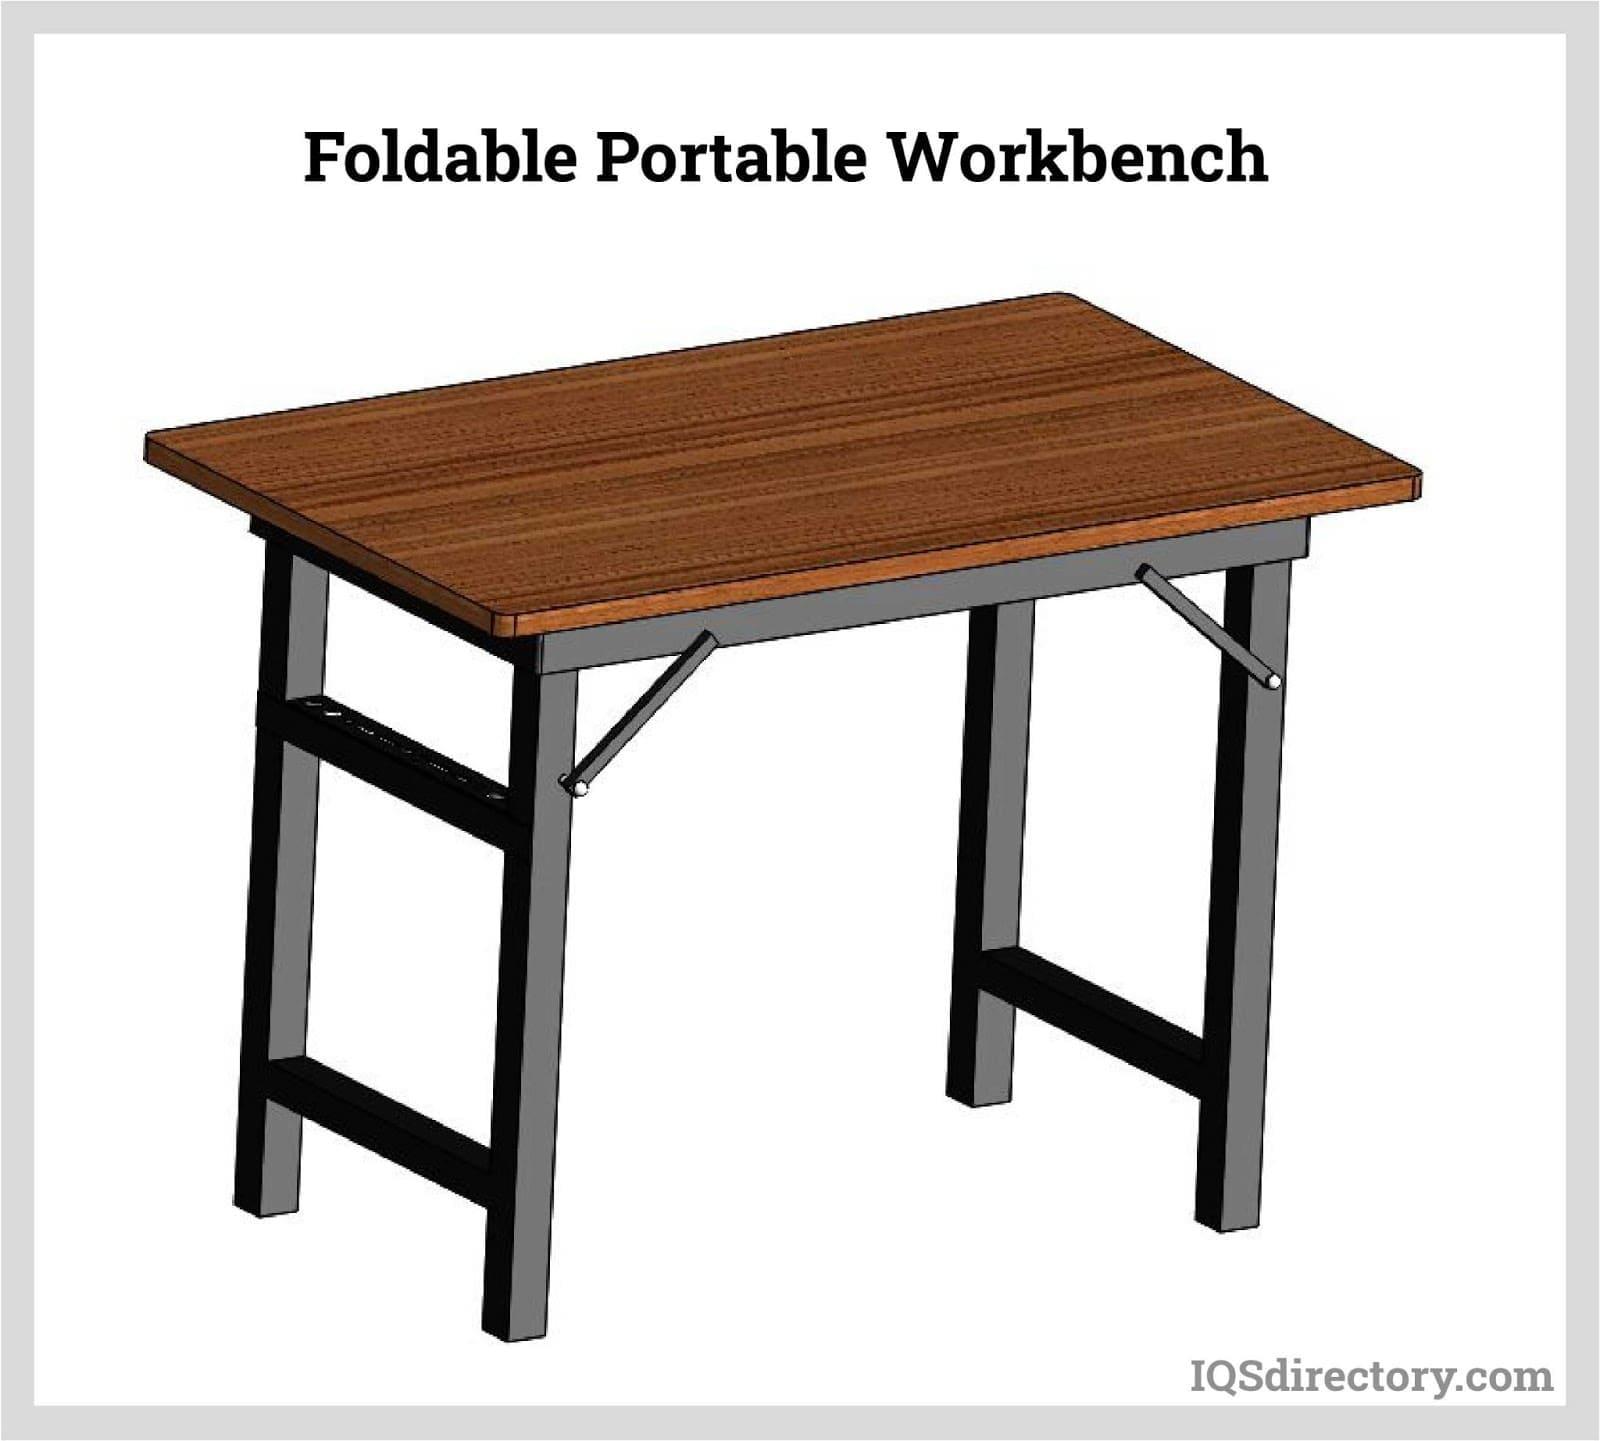 Portable Foldable Workbench